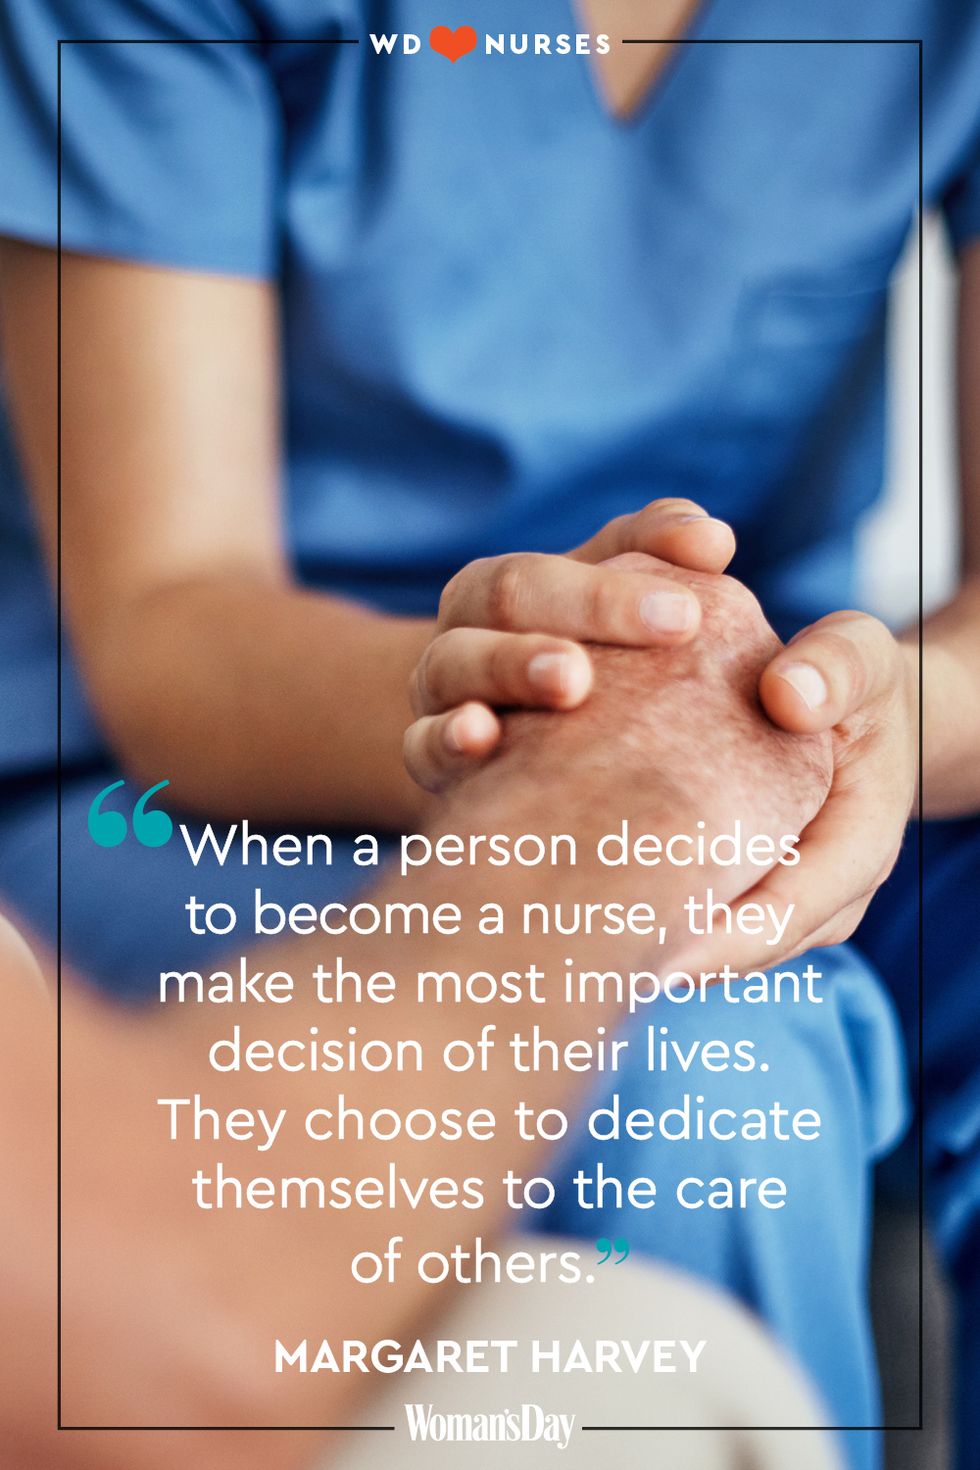 9 More Inspiring Quotes About Nursing